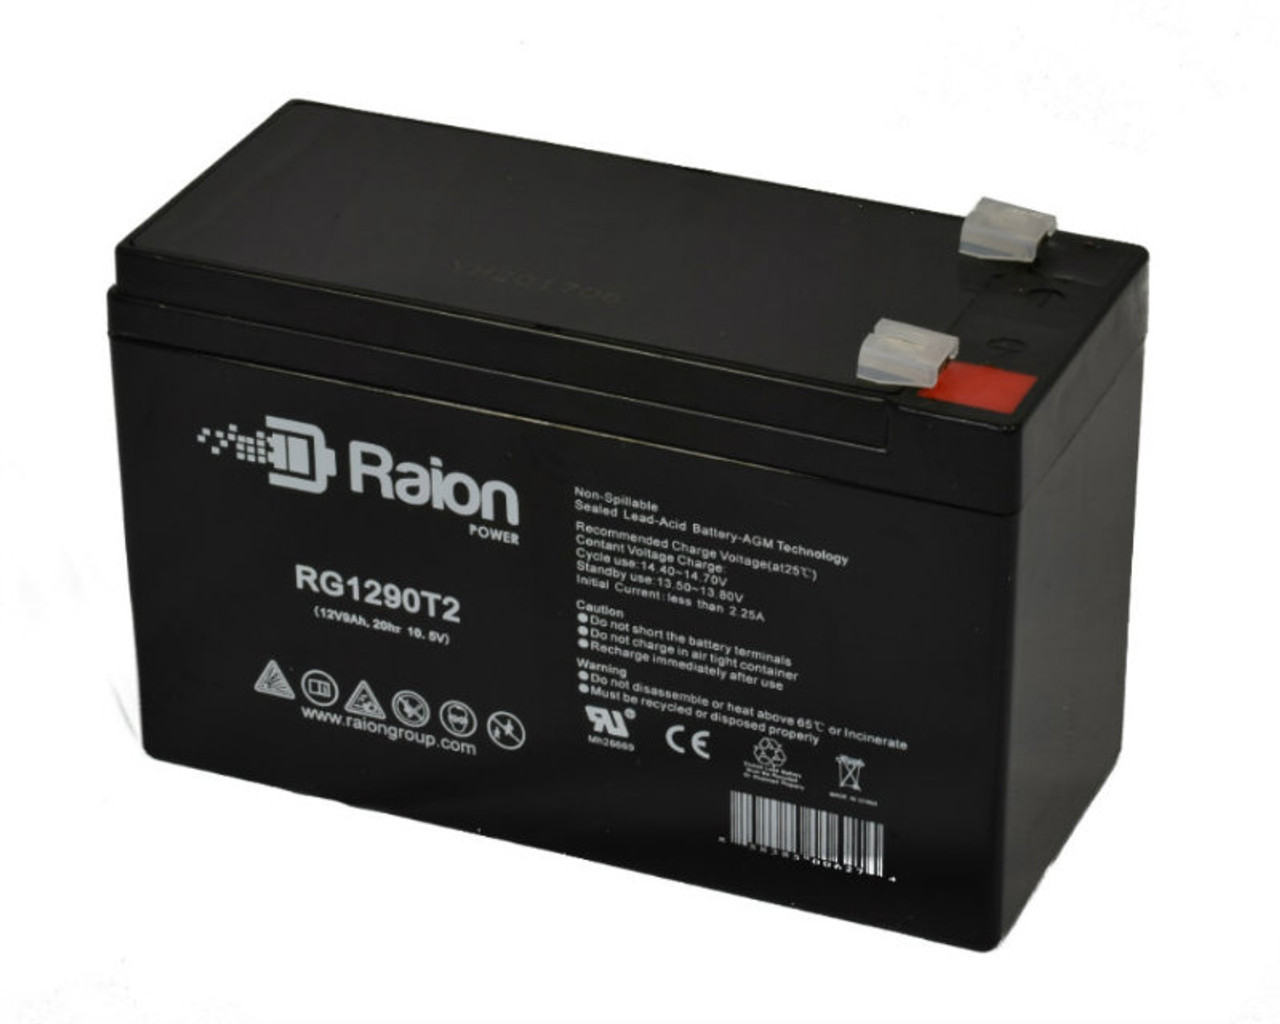 Raion Power RG1290T2 12V 9Ah AGM Battery for Merida PC 550 LTD